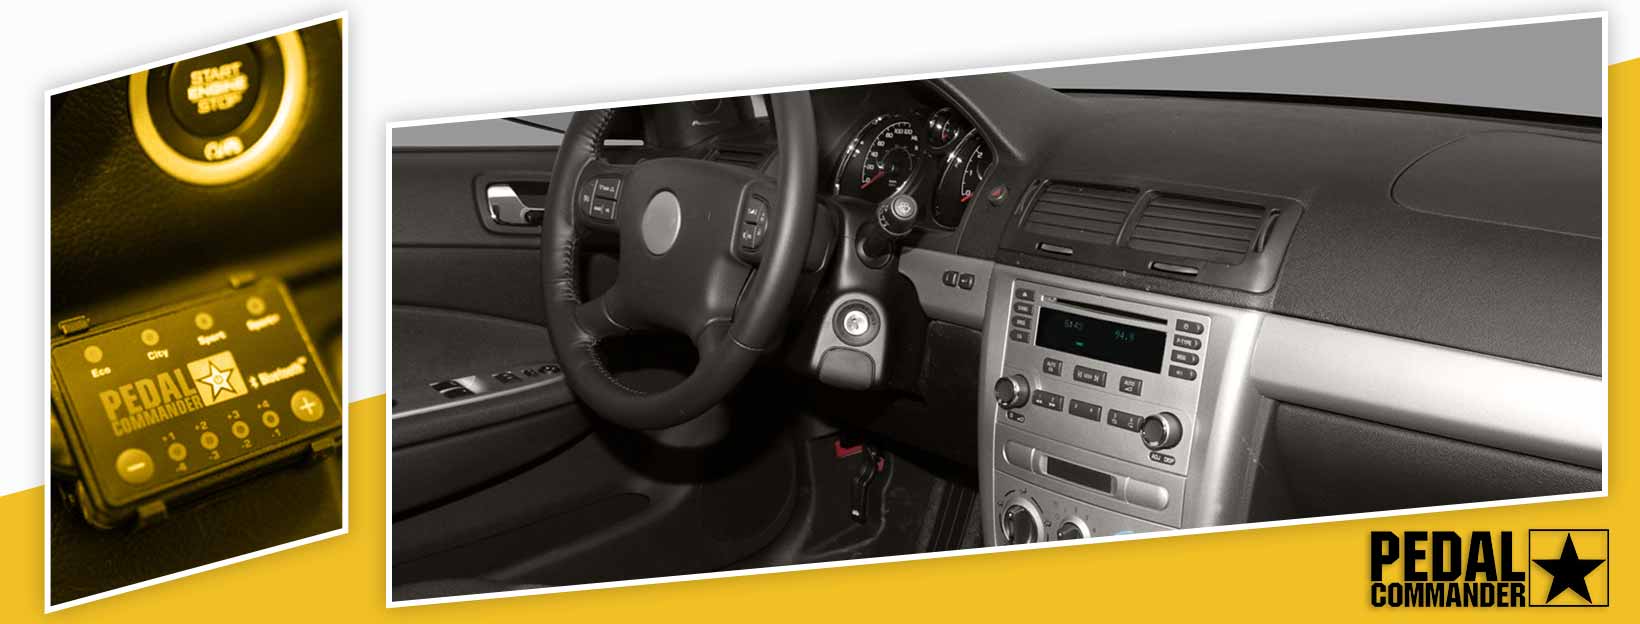 Pedal Commander for Chevrolet Cobalt - interior